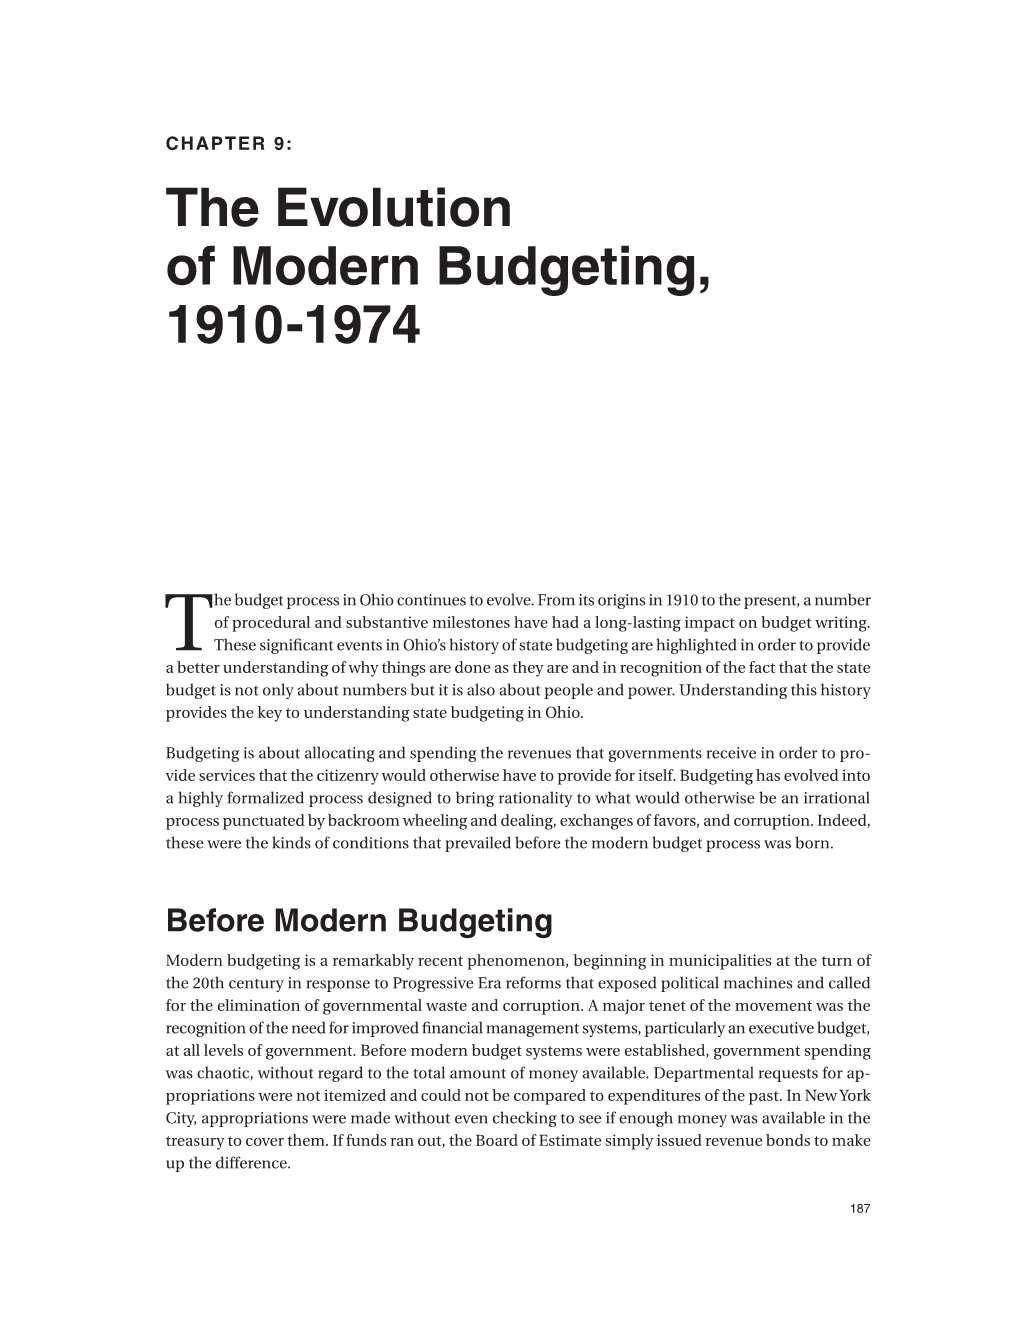 The Evolution of Modern Budgeting, 1910-1974